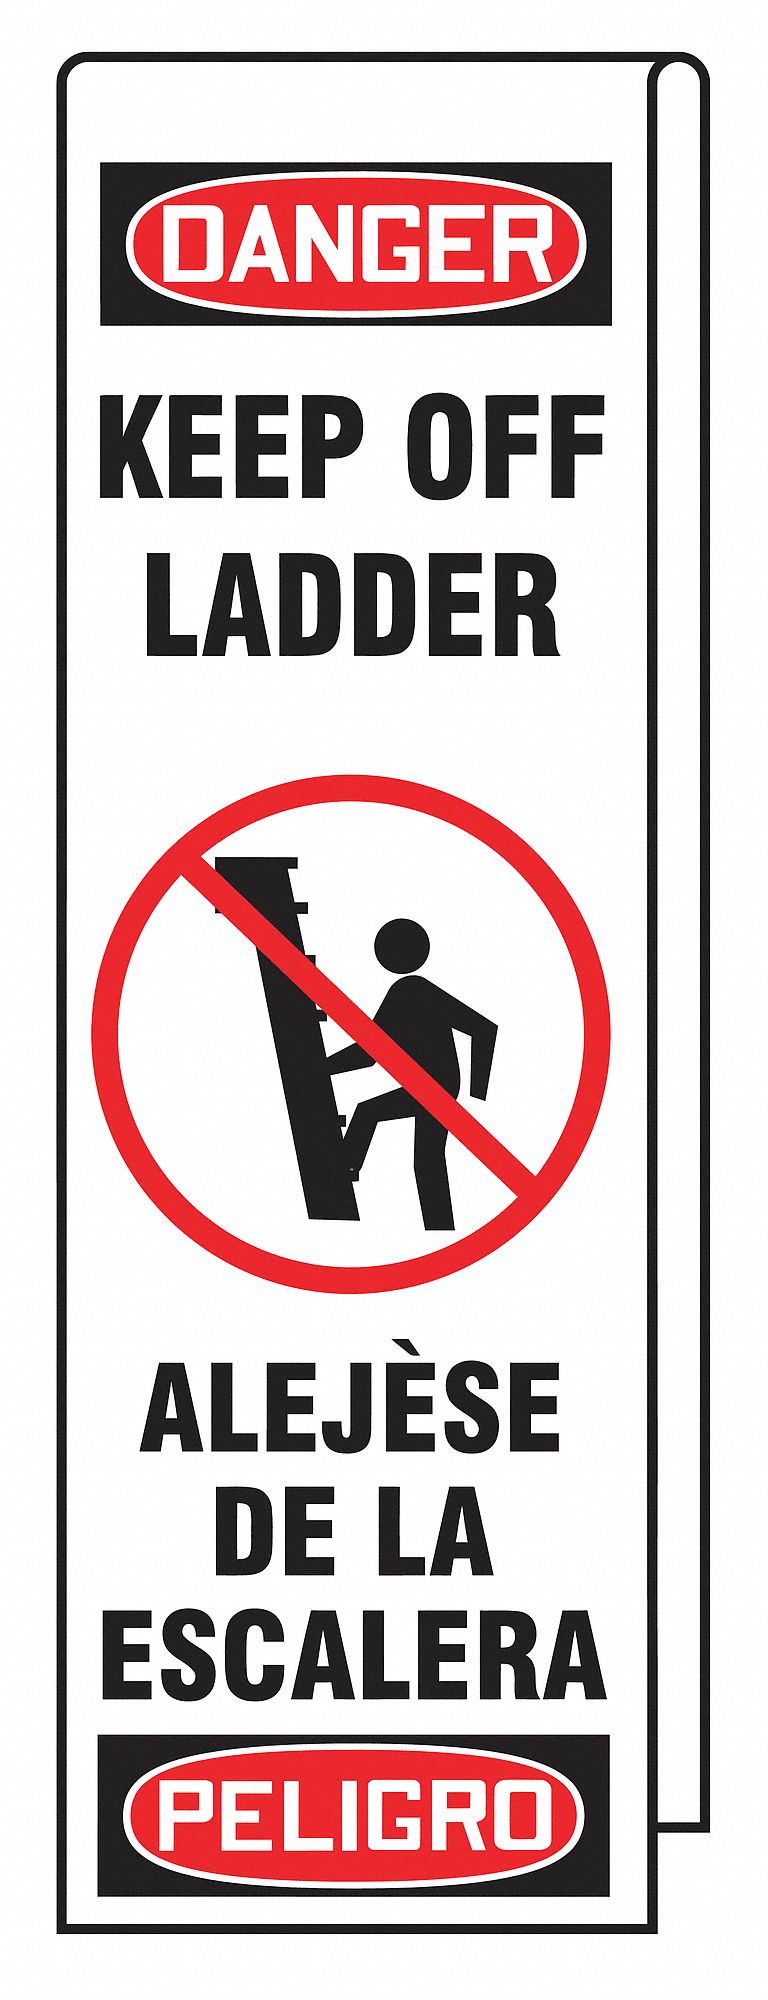 Ladder Shield Wrap: English, Danger Keep Off Ladder/Peligro Alejese De La Escalera